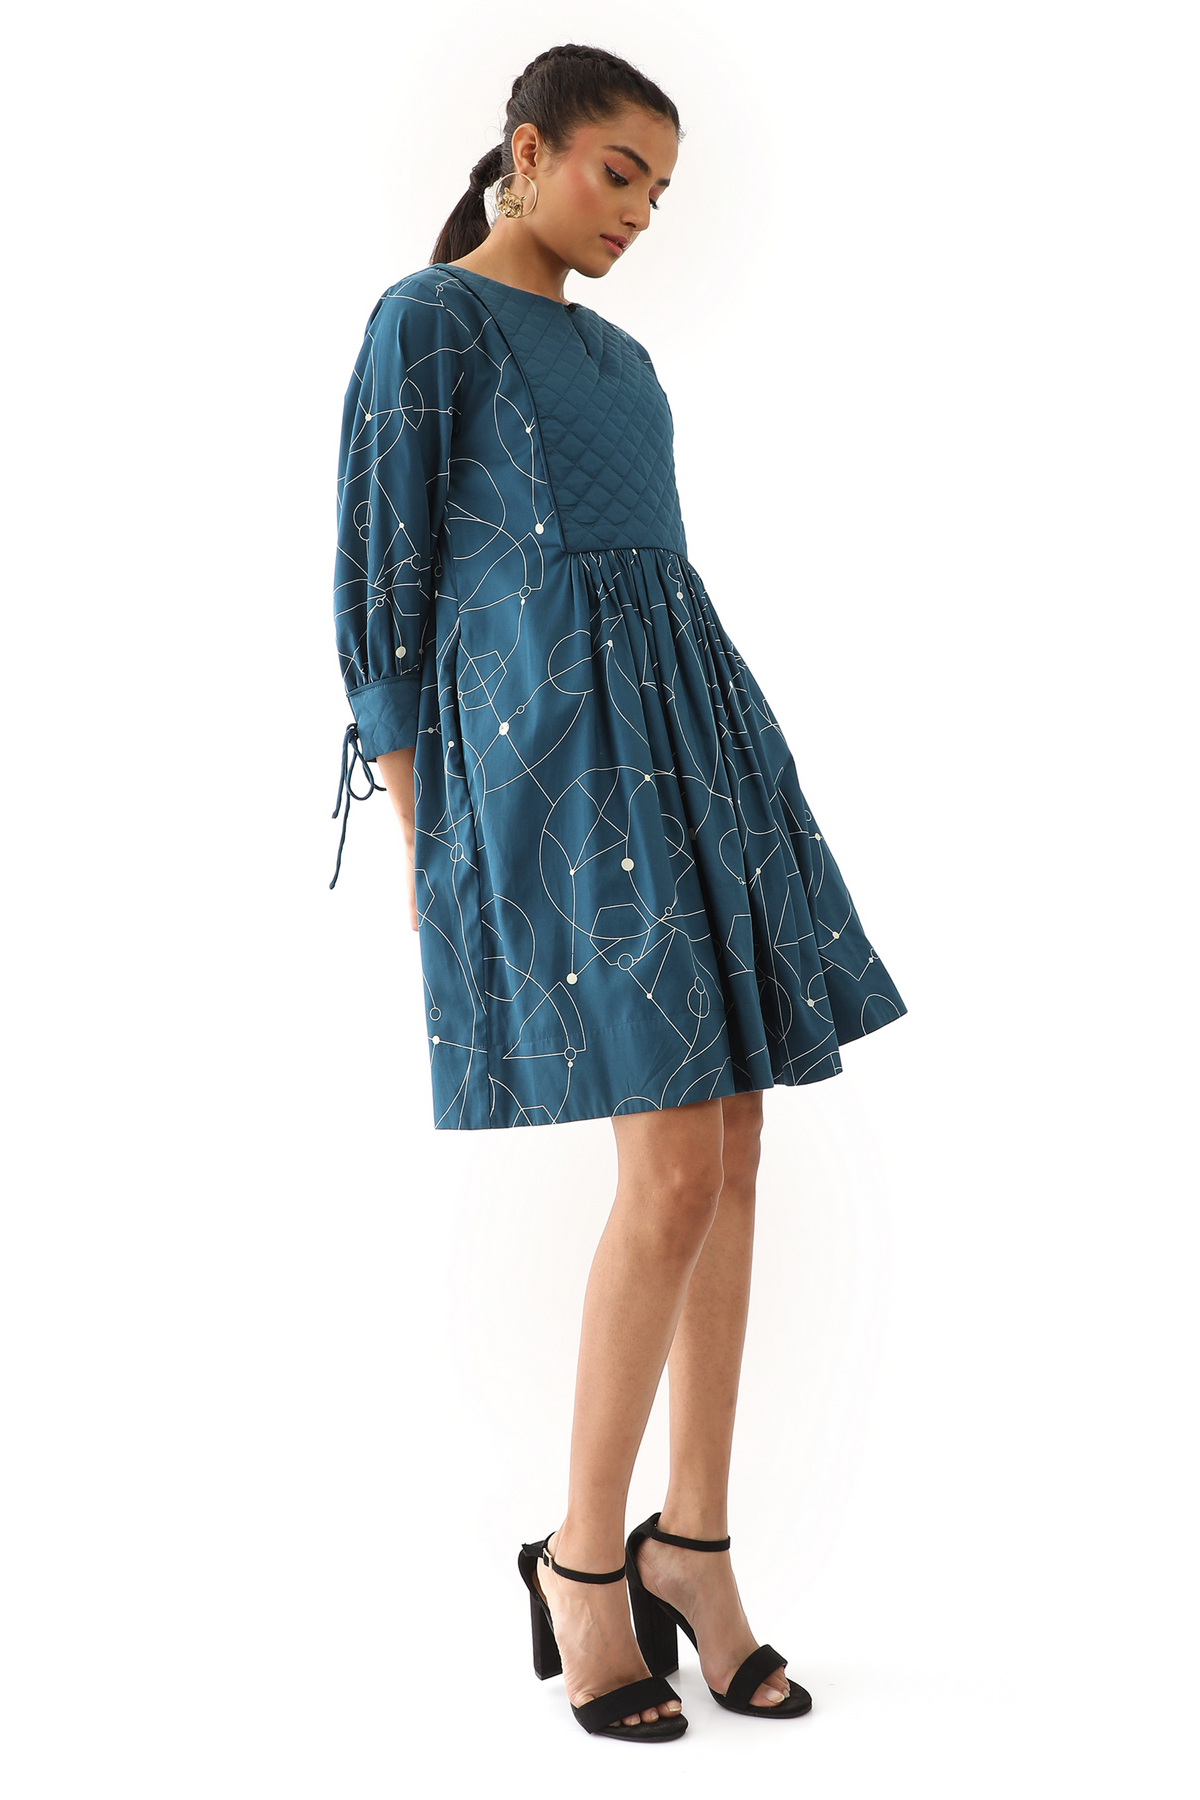 Luxe - Blue Dress